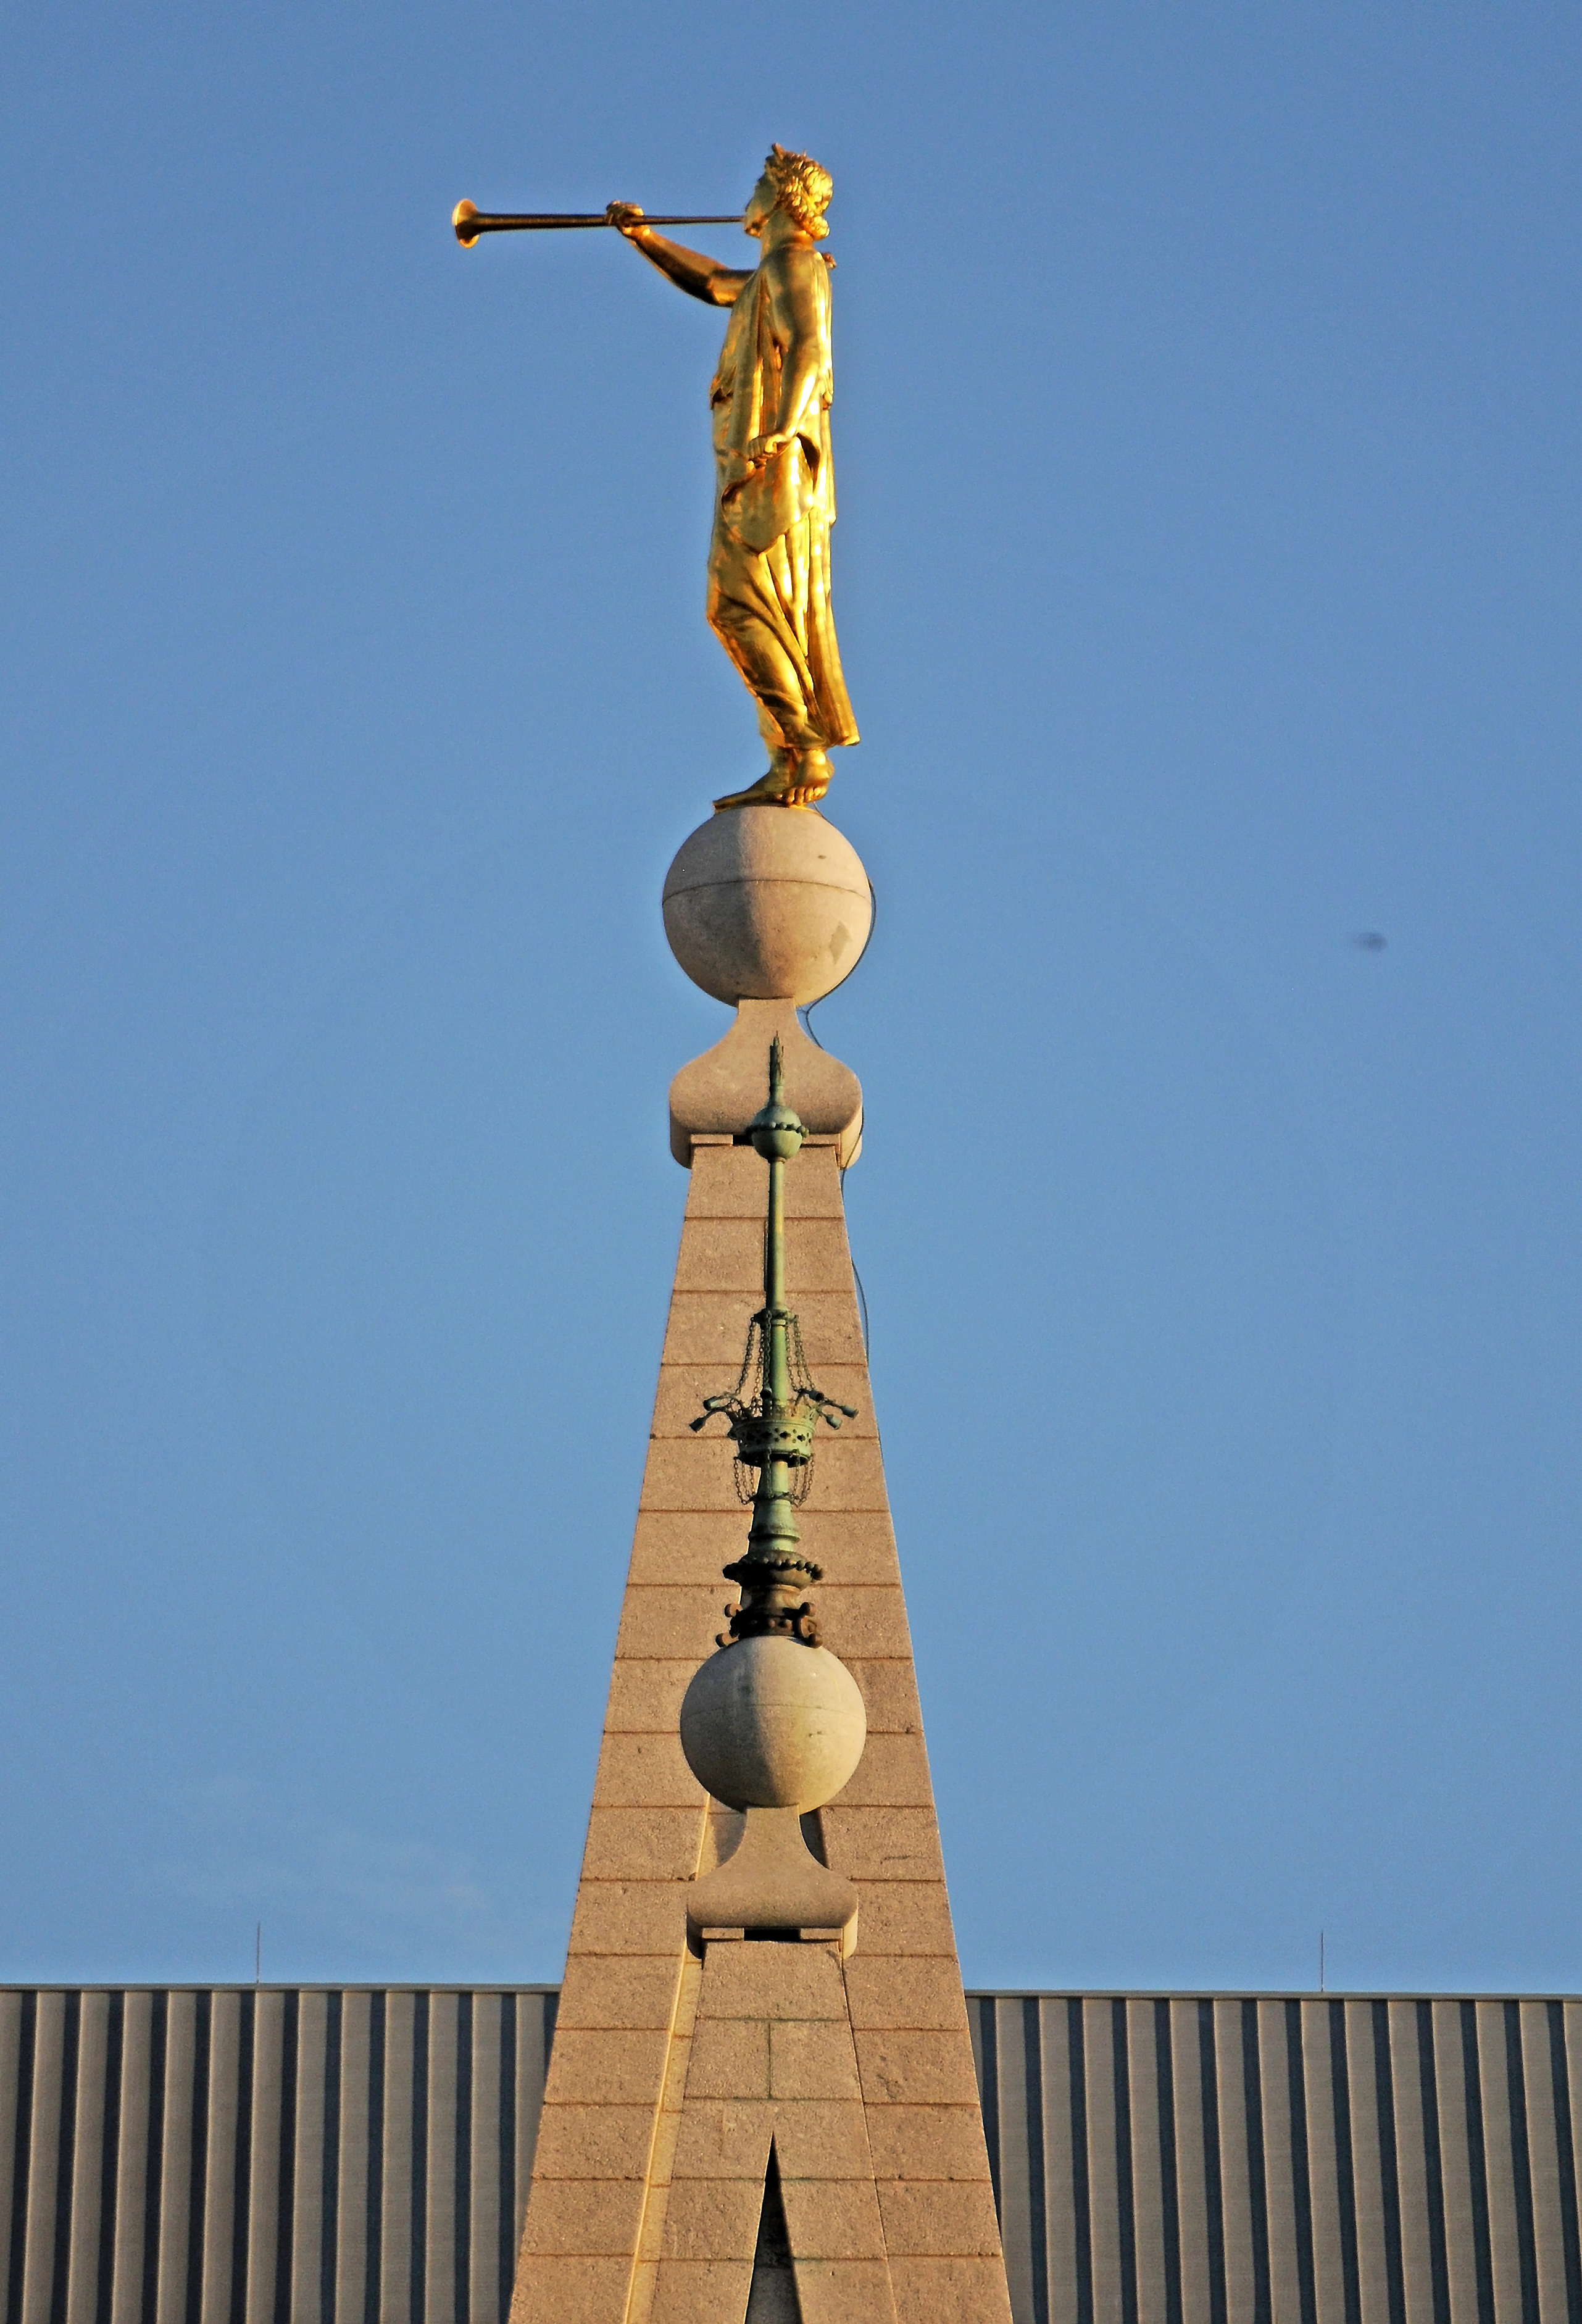 Angel Moroni at the Top of the Mormon Temple - Salt Lake City